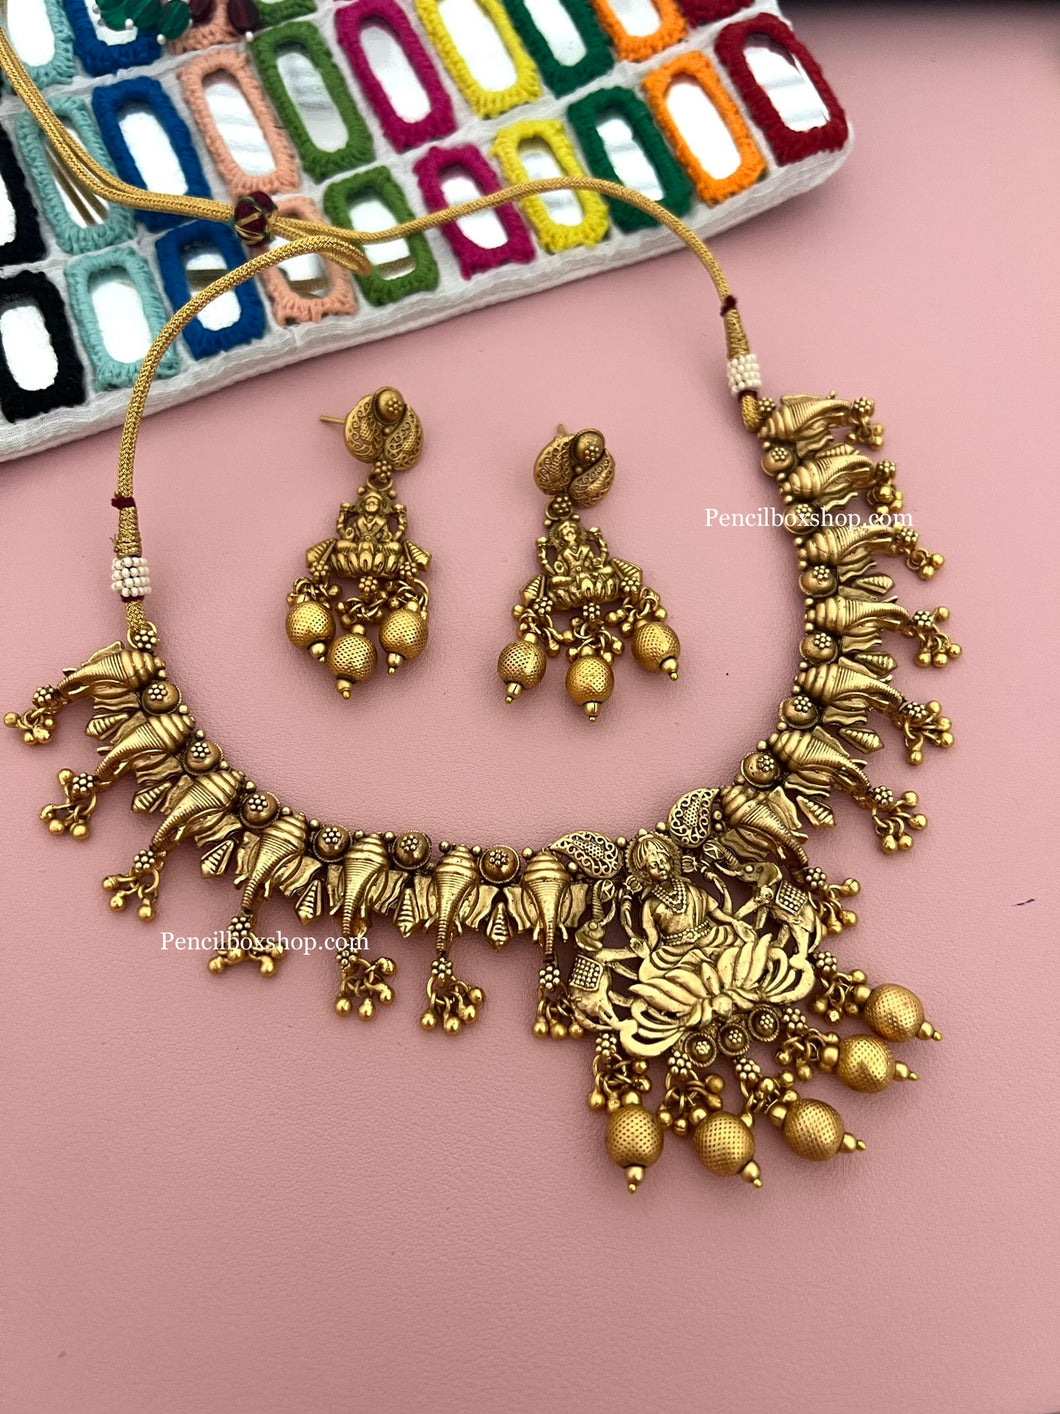 Golden Matte finish Ganesha Premium Quality Lakshmi ji Temple Jewelry Necklace set